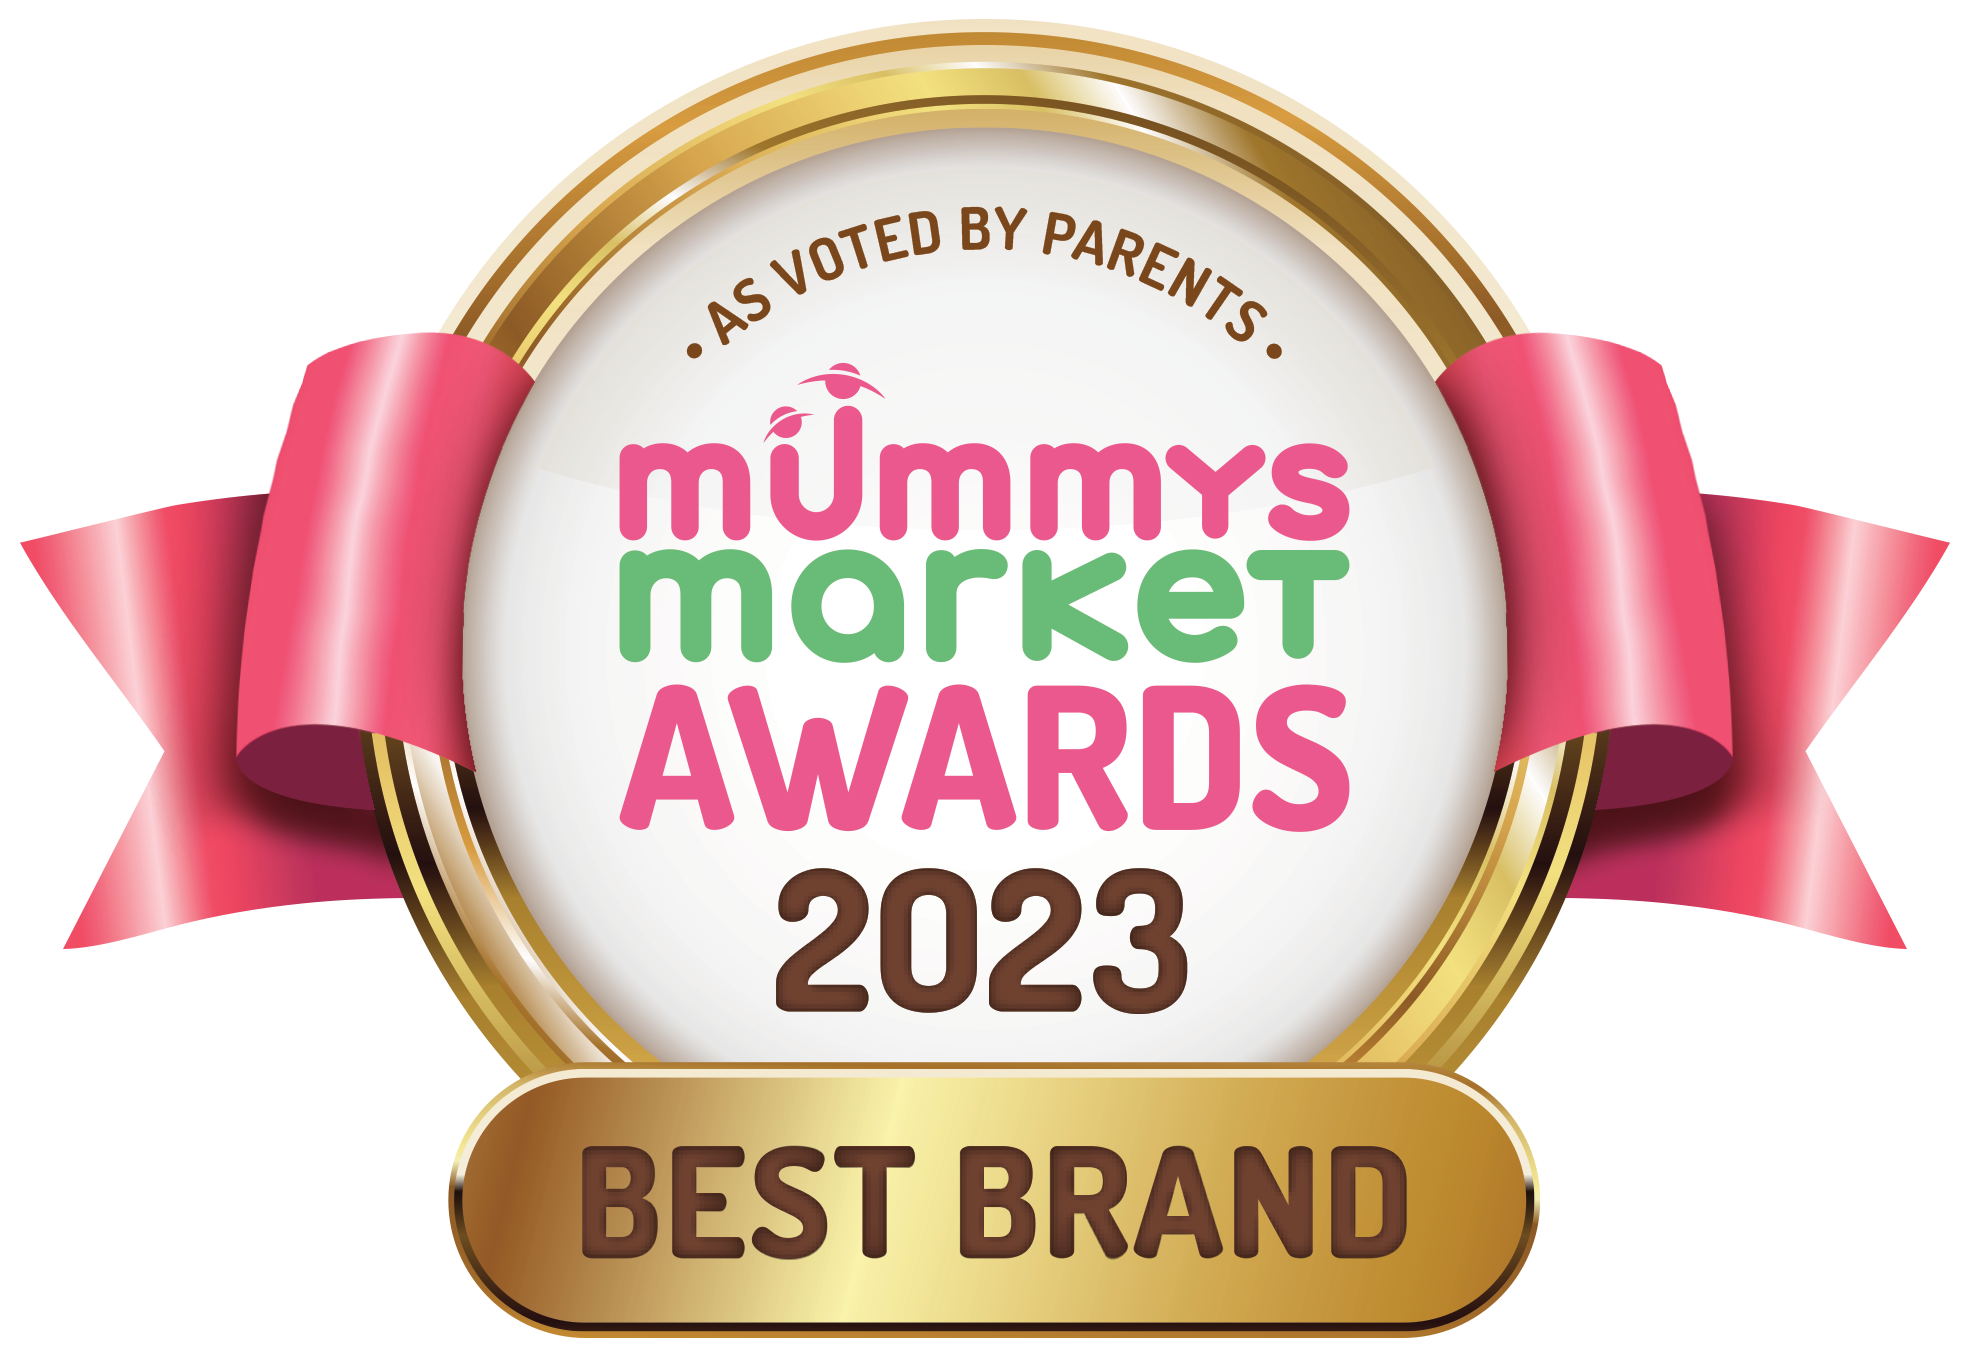 Mummy Market Award Winner 2022